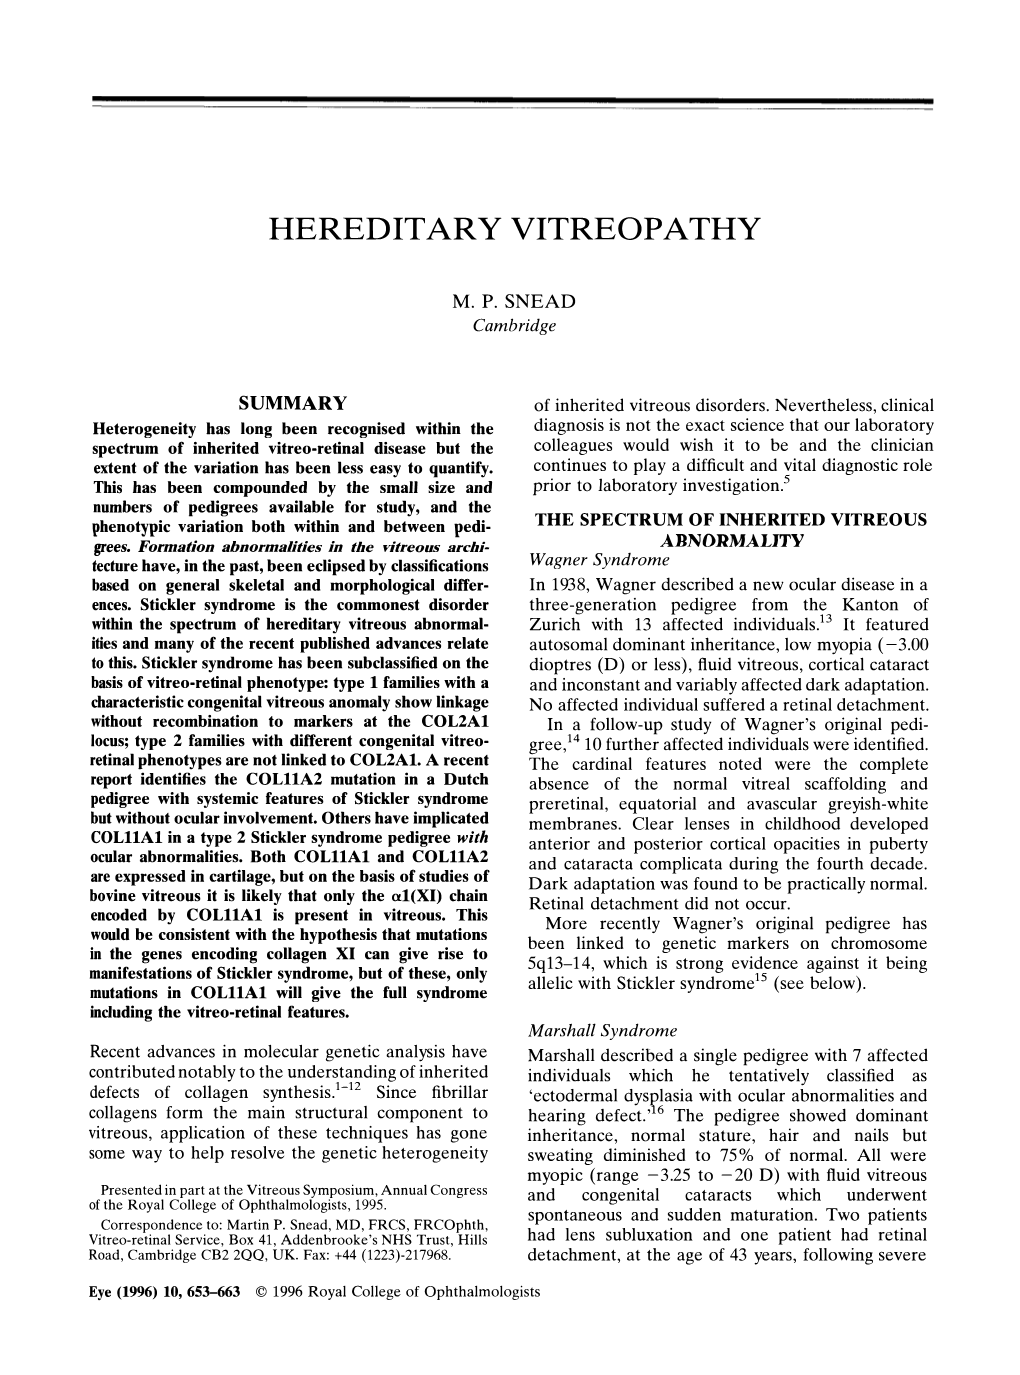 Hereditary Vitreopathy